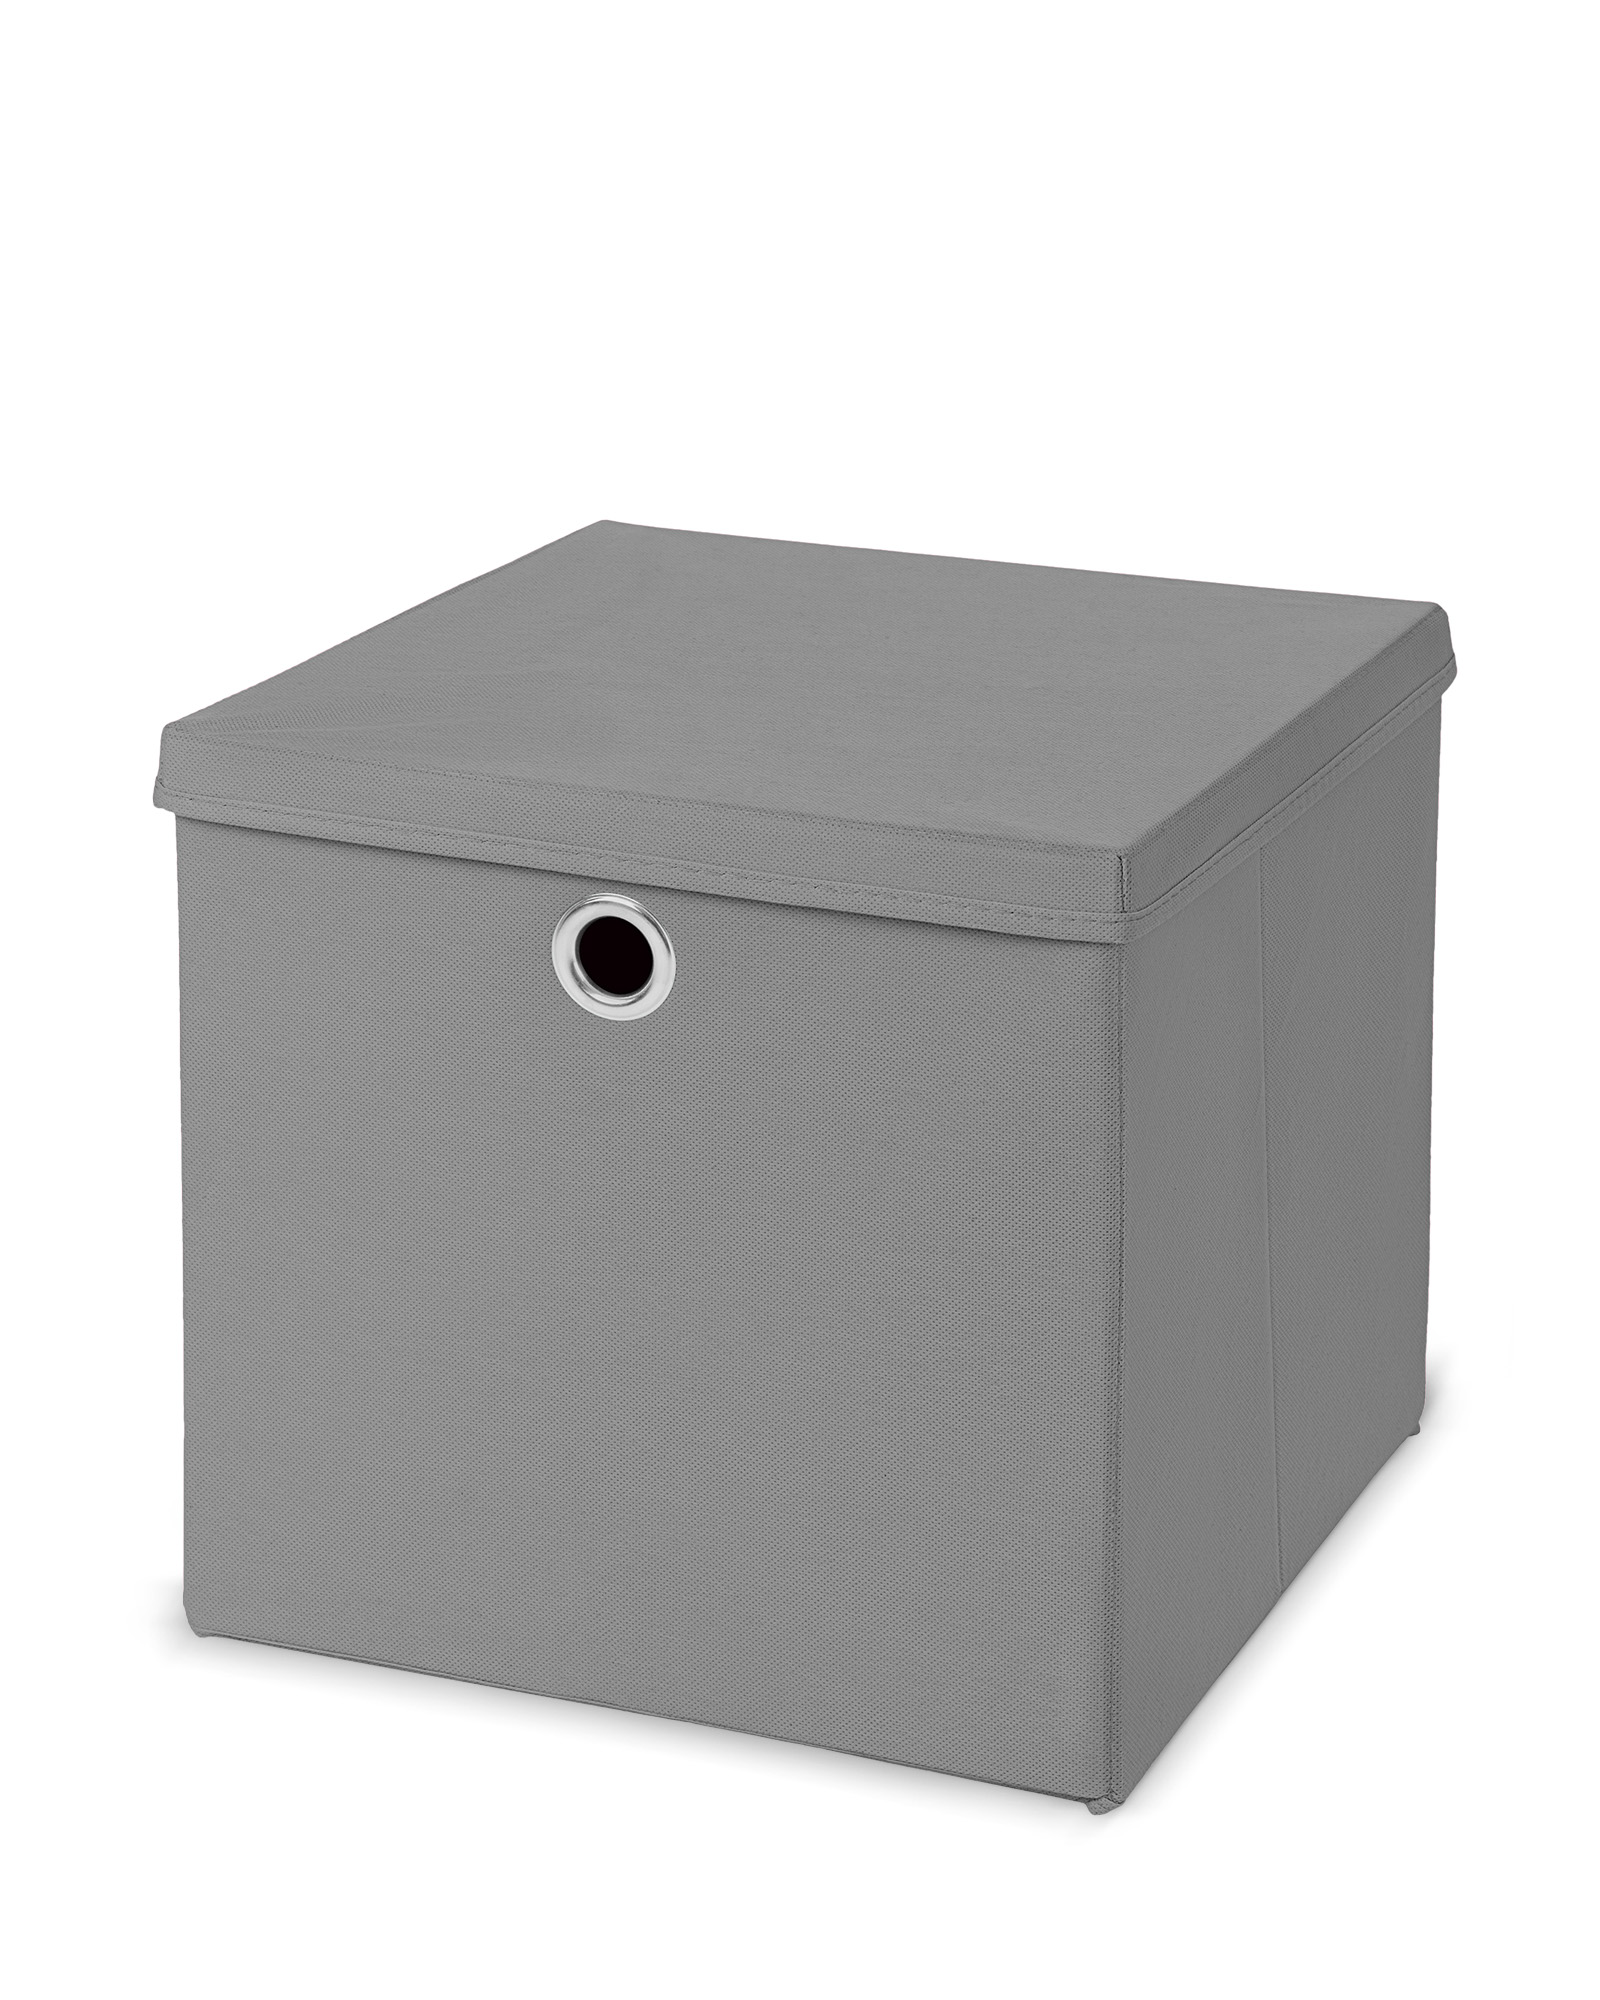 Faltbox mit Deckel, grau, 400 x 300 x 320 mm - EMPORO